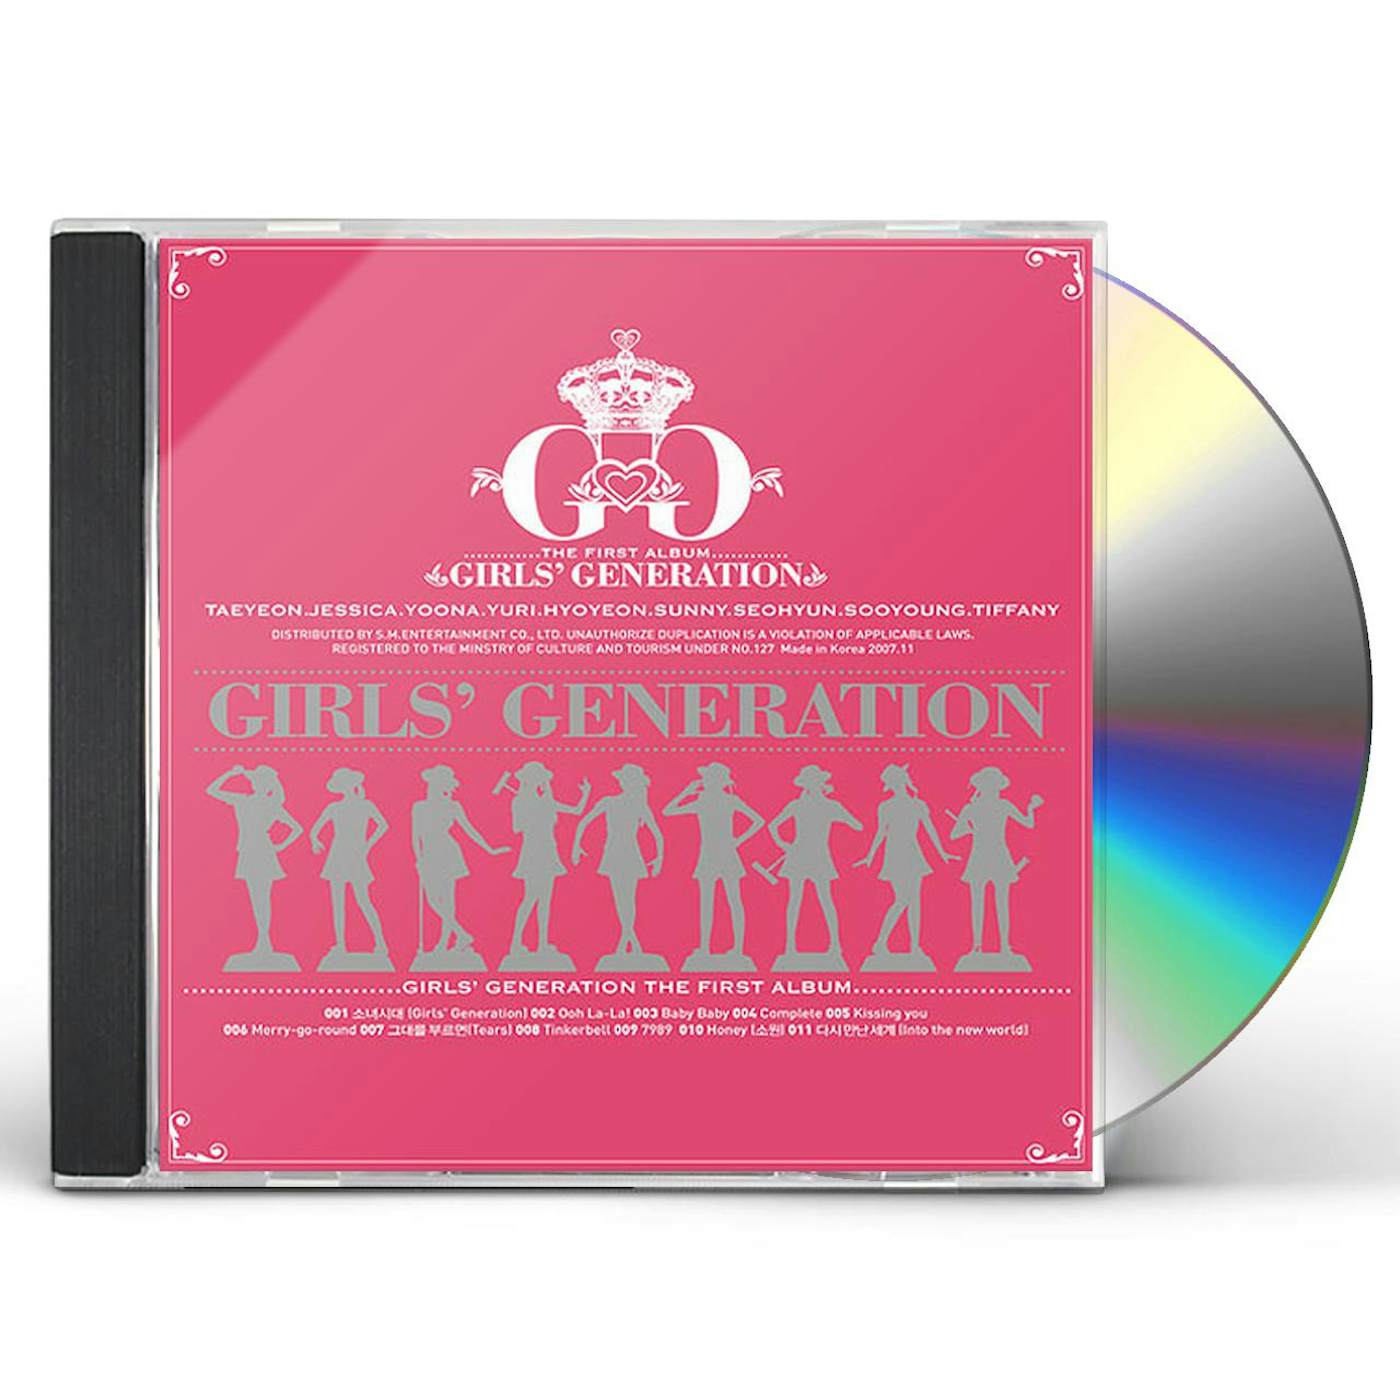 Girls' Generation BABY BABY CD